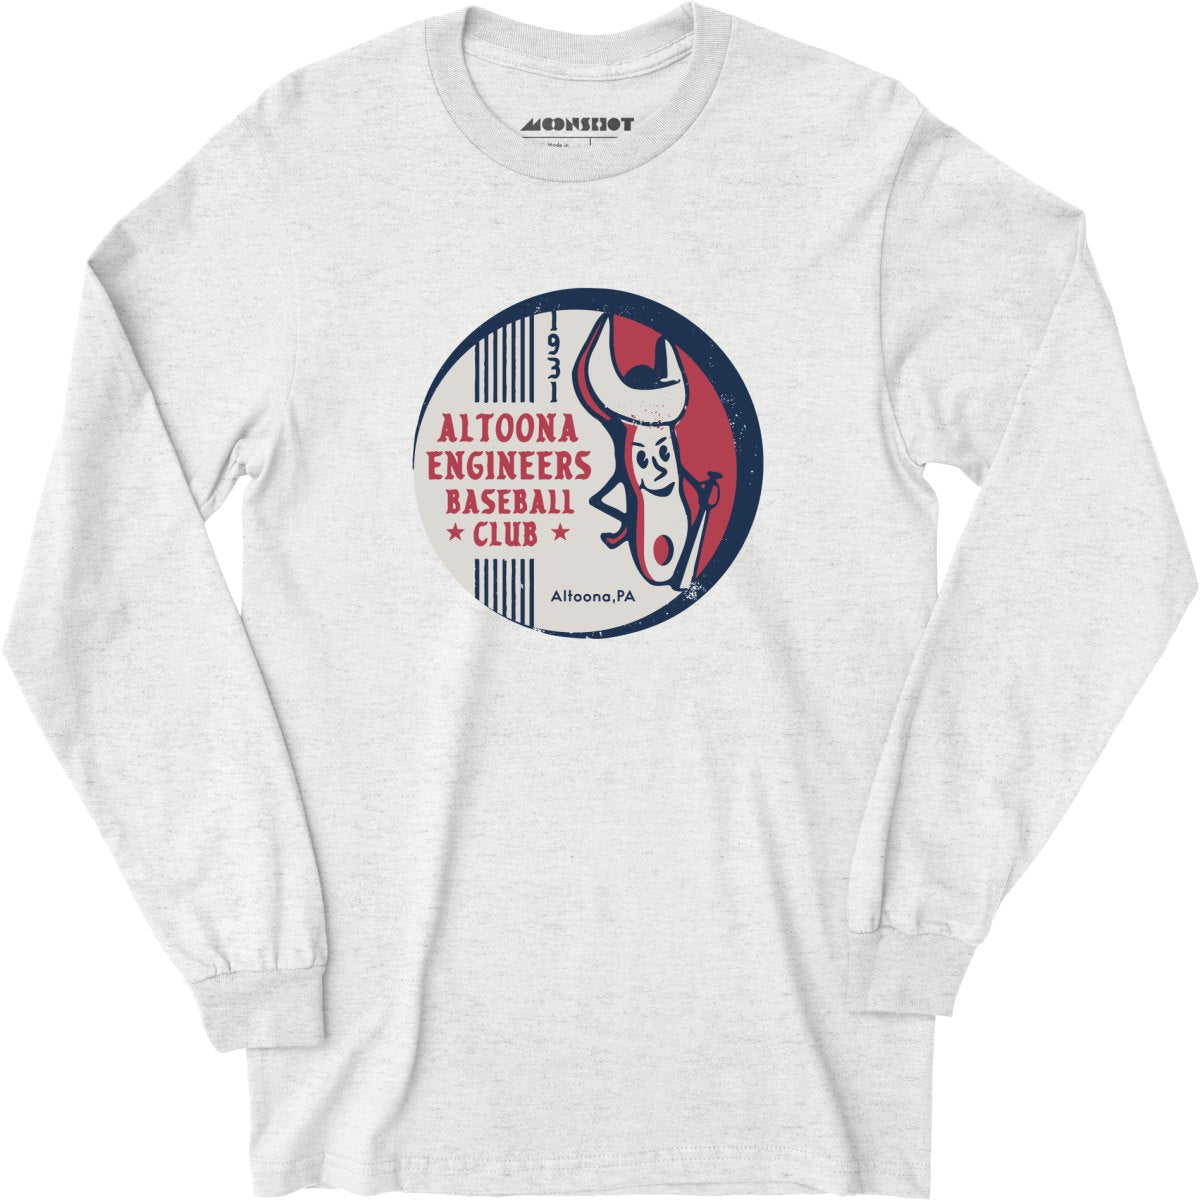 Altoona Engineers - Pennsylvania - Vintage Defunct Baseball Teams - Long Sleeve T-Shirt